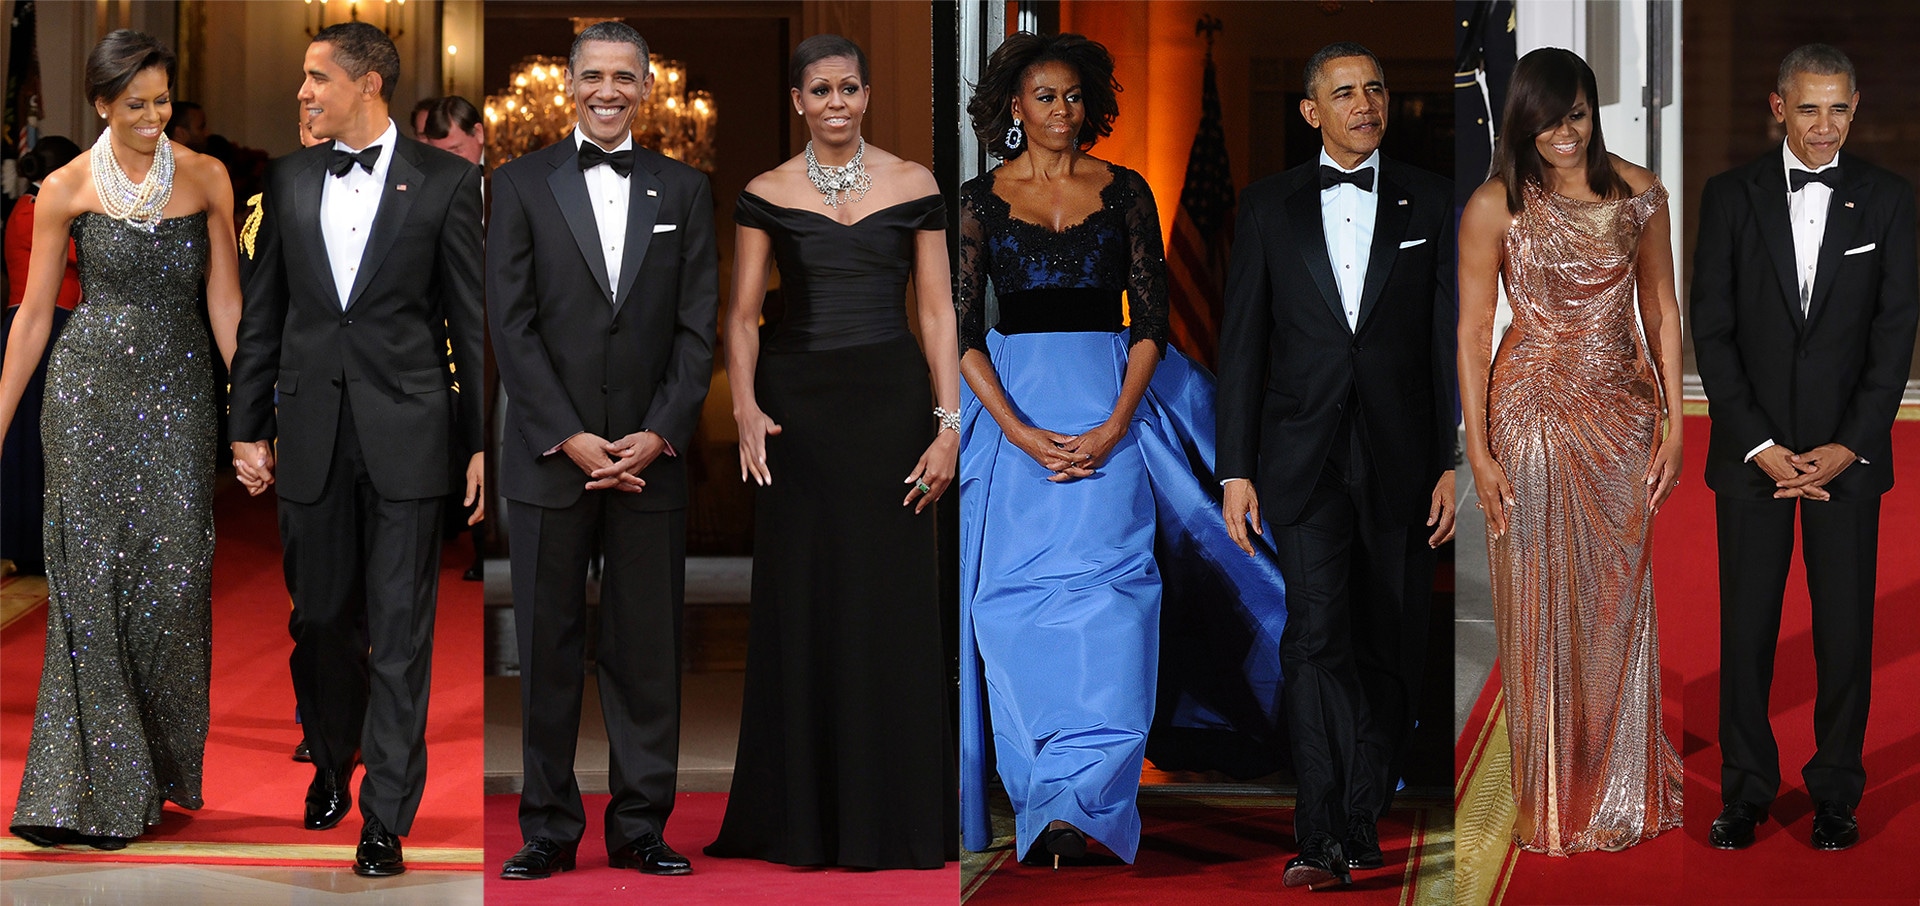 President Barack Obama, Michelle Obama, Tuxedos